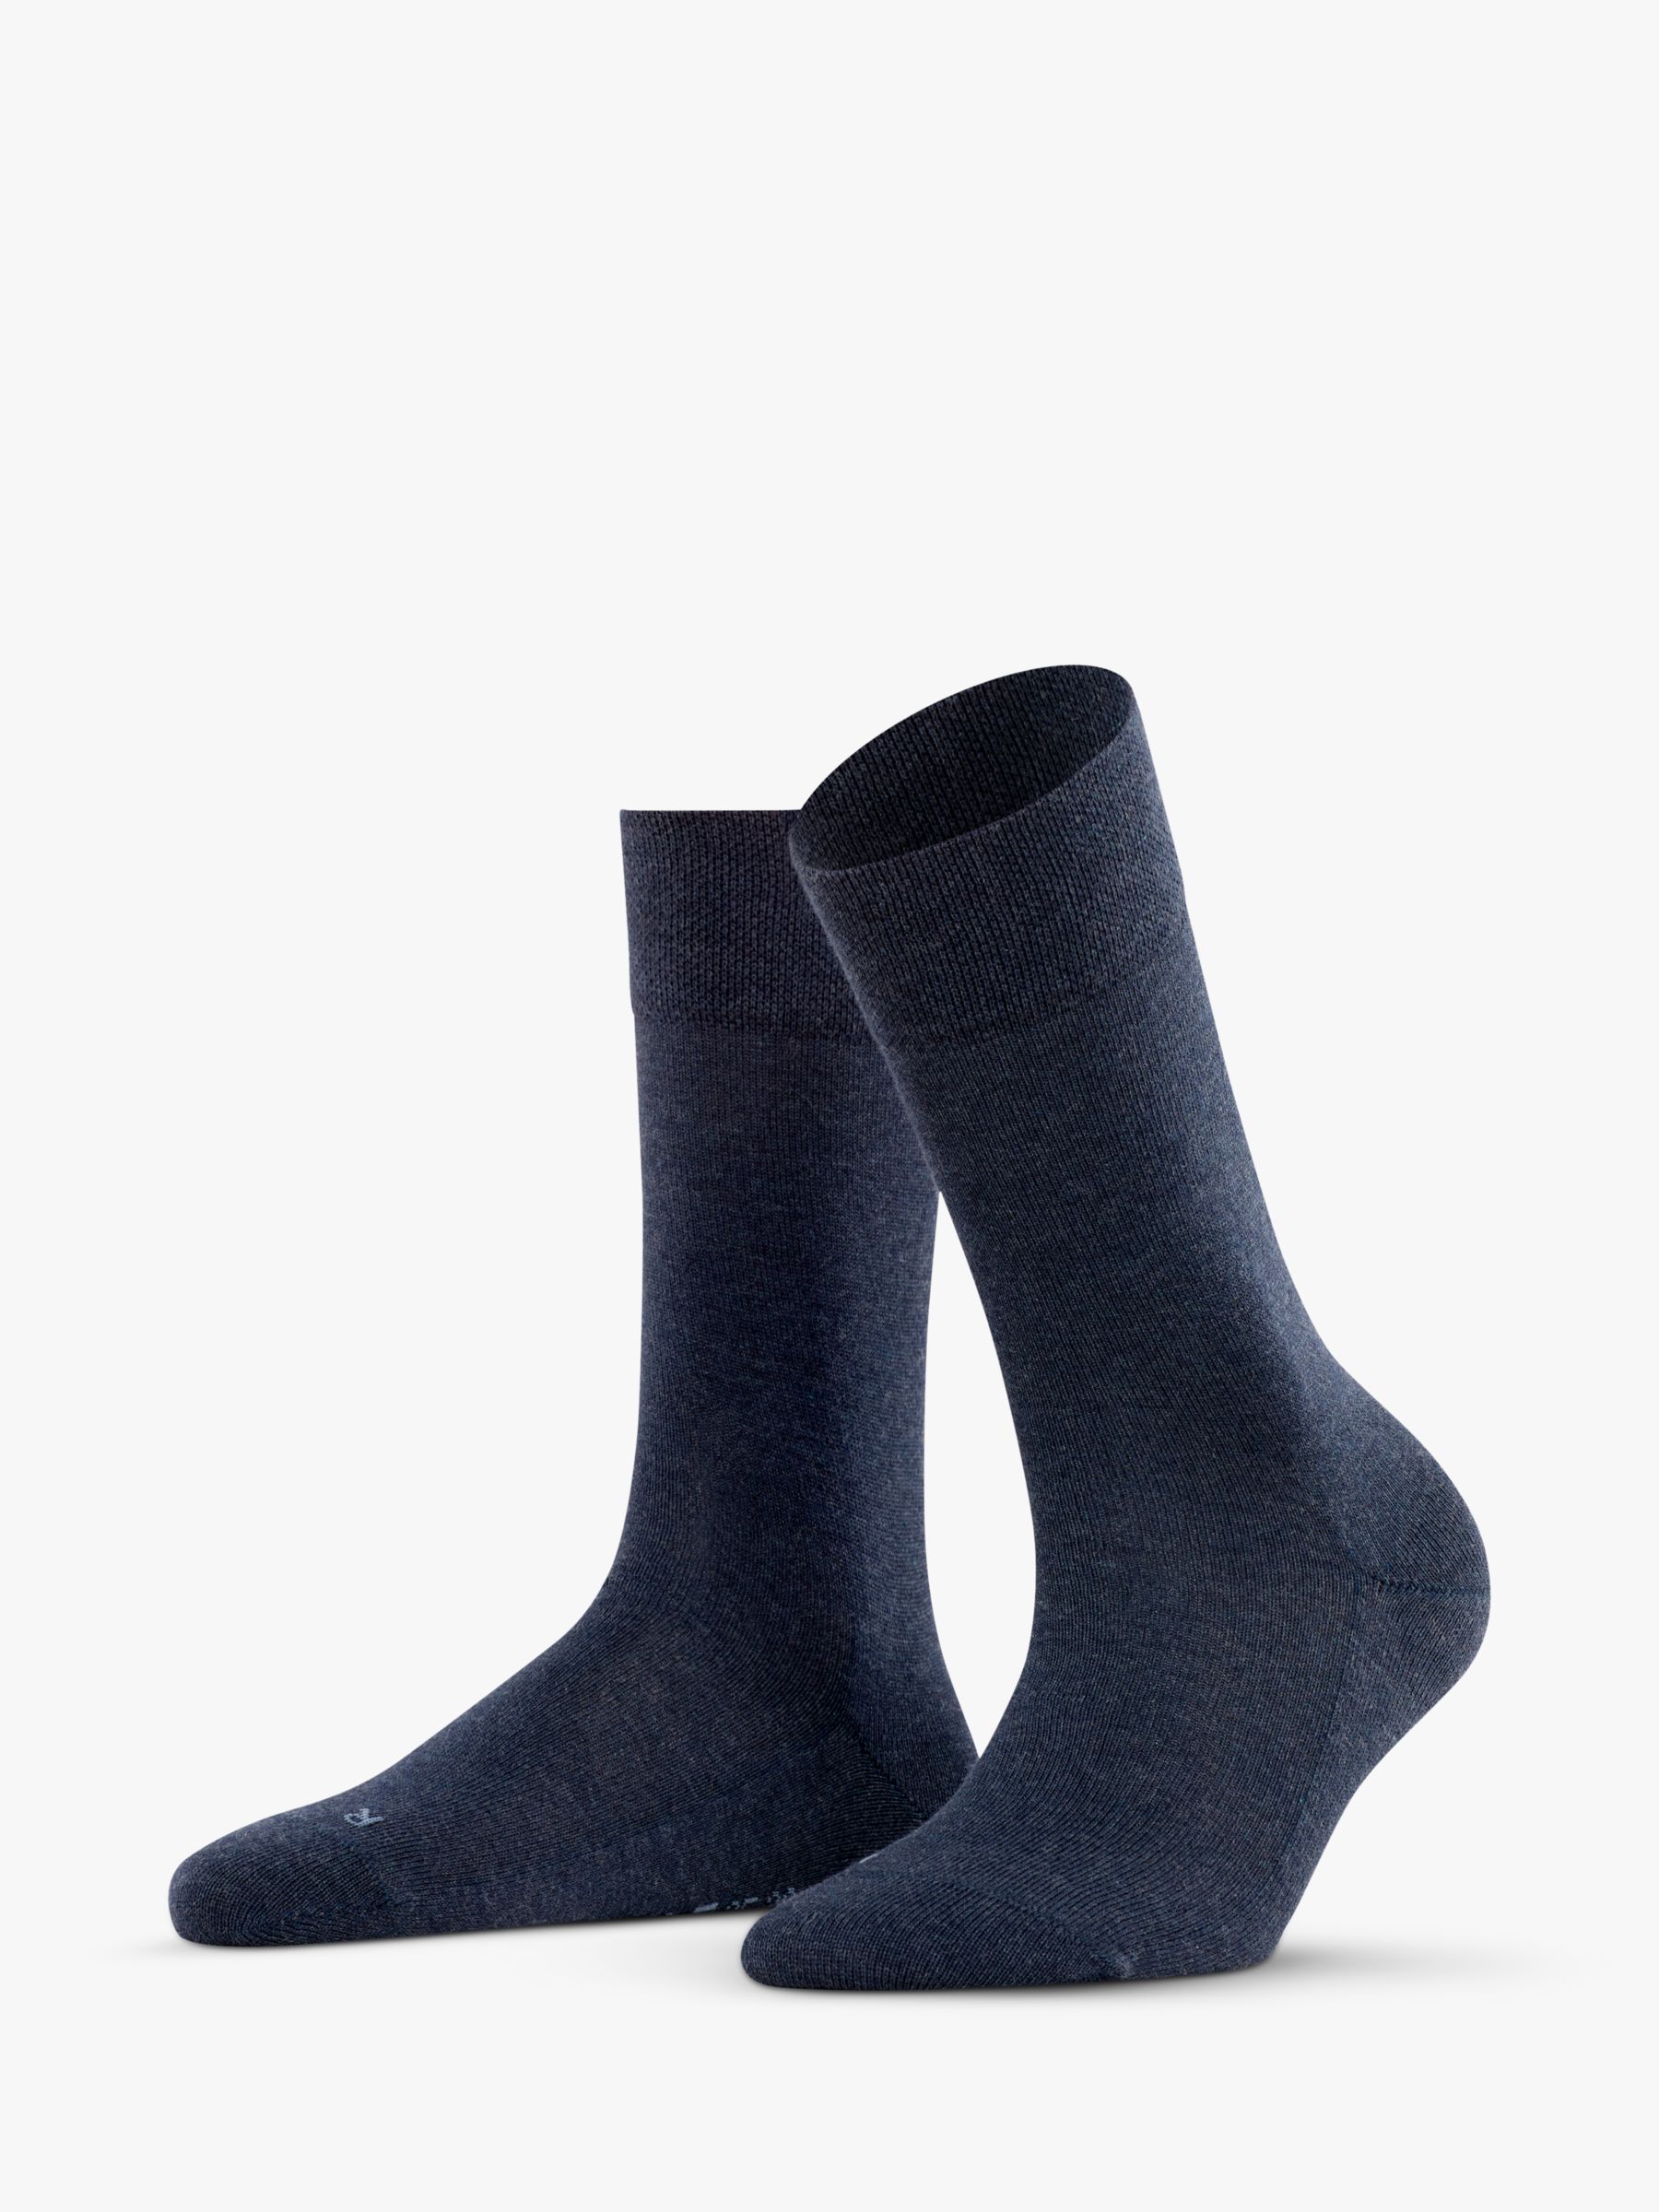 FALKE Soft Merino Wool Ankle Socks, 7826 Military at John Lewis & Partners